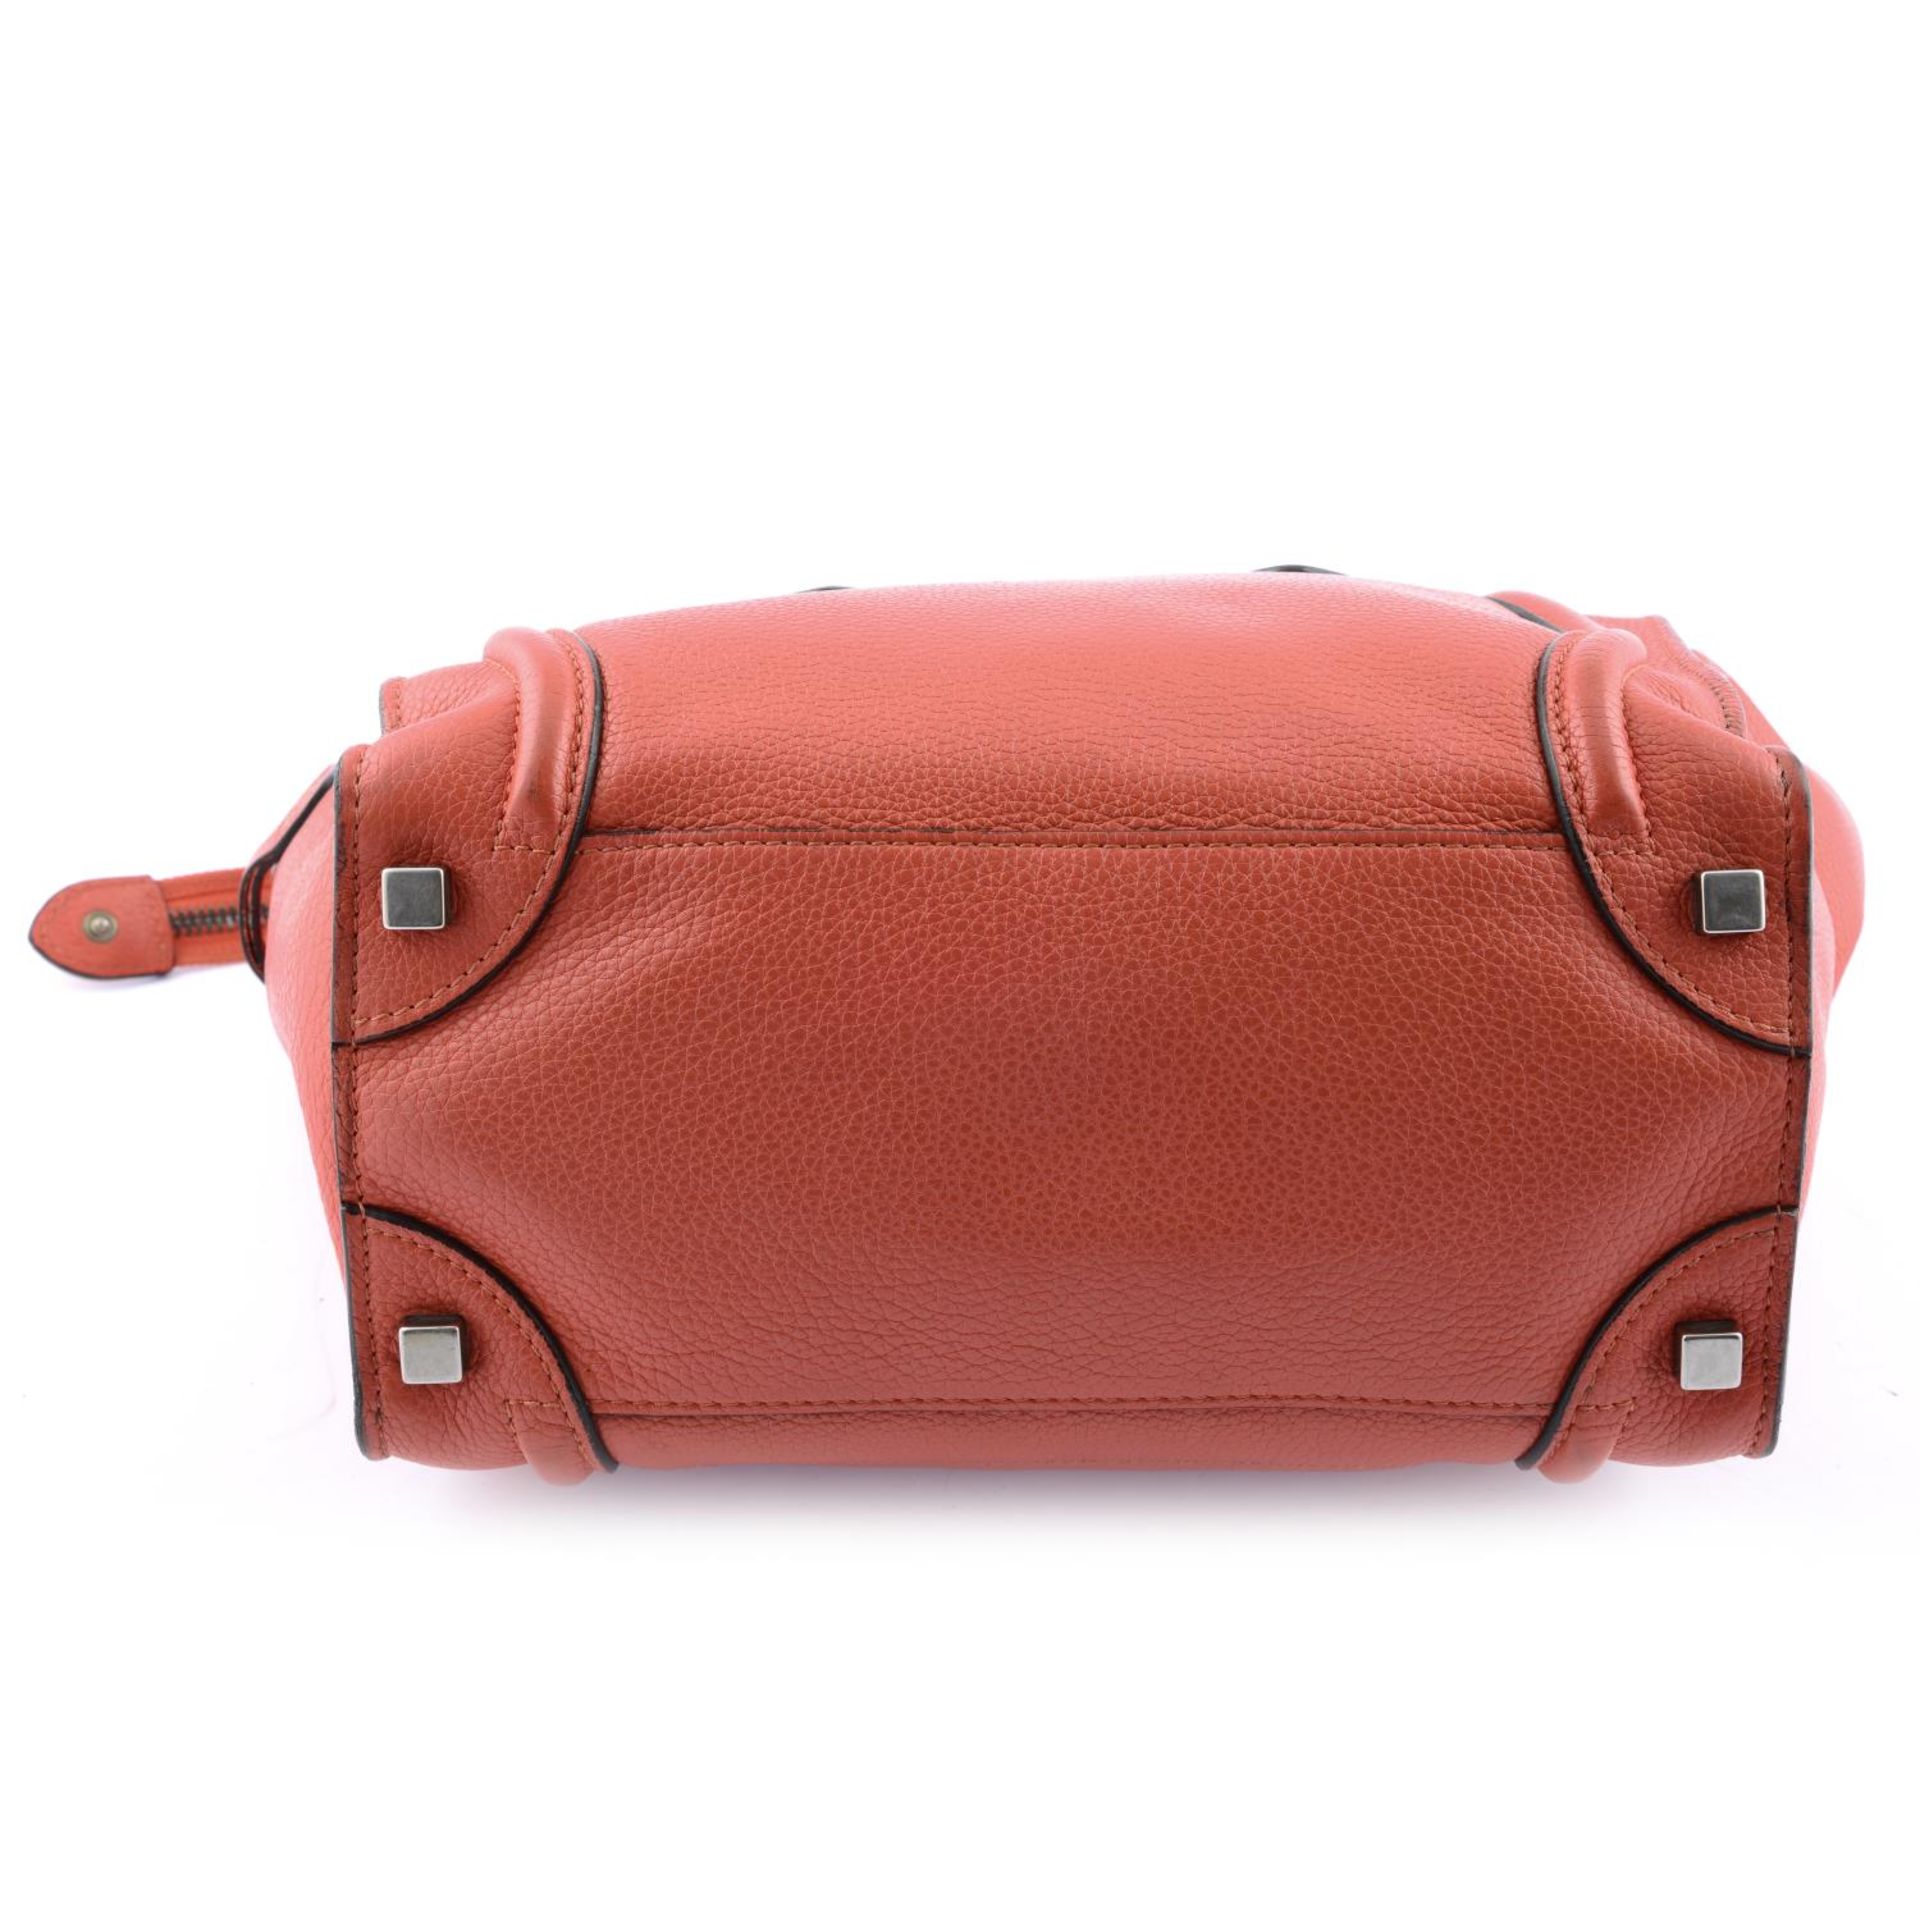 CÉLINE - a Micro Luggage Tote handbag. - Image 4 of 4